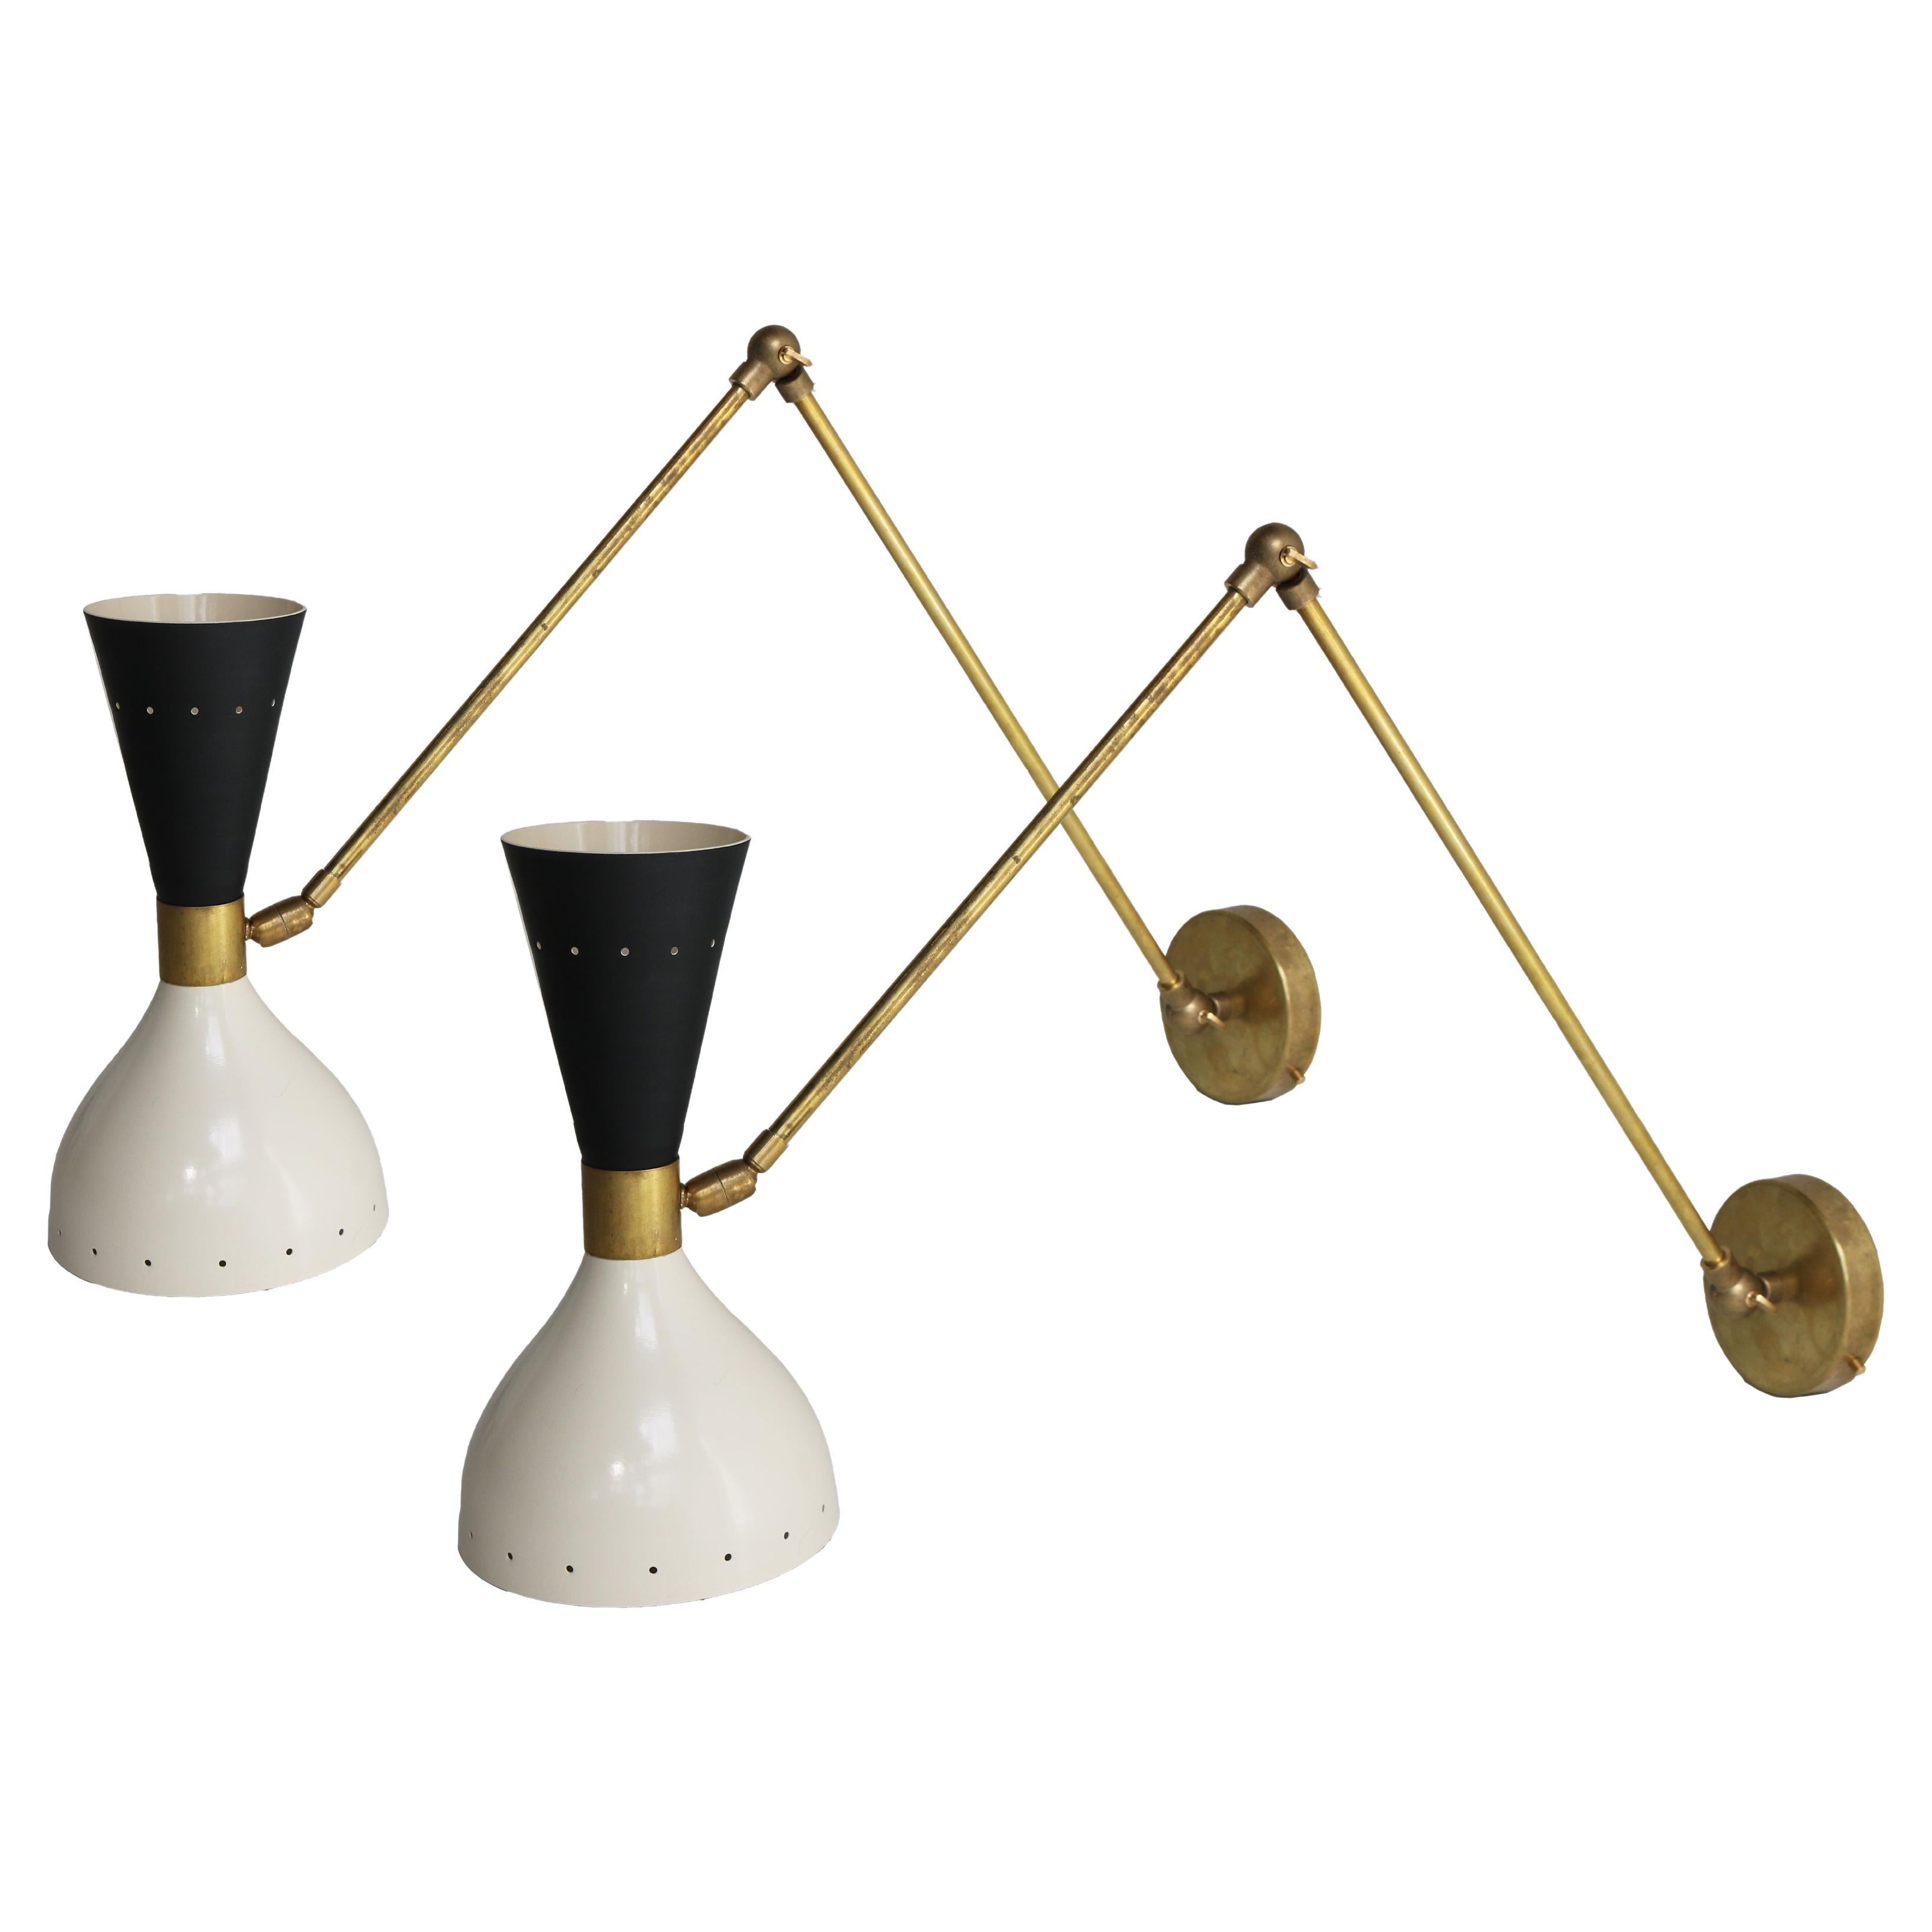 Pair of Adjustable Italian Wall Lights / Sconces 1950 Brass Black White Stilnovo For Sale